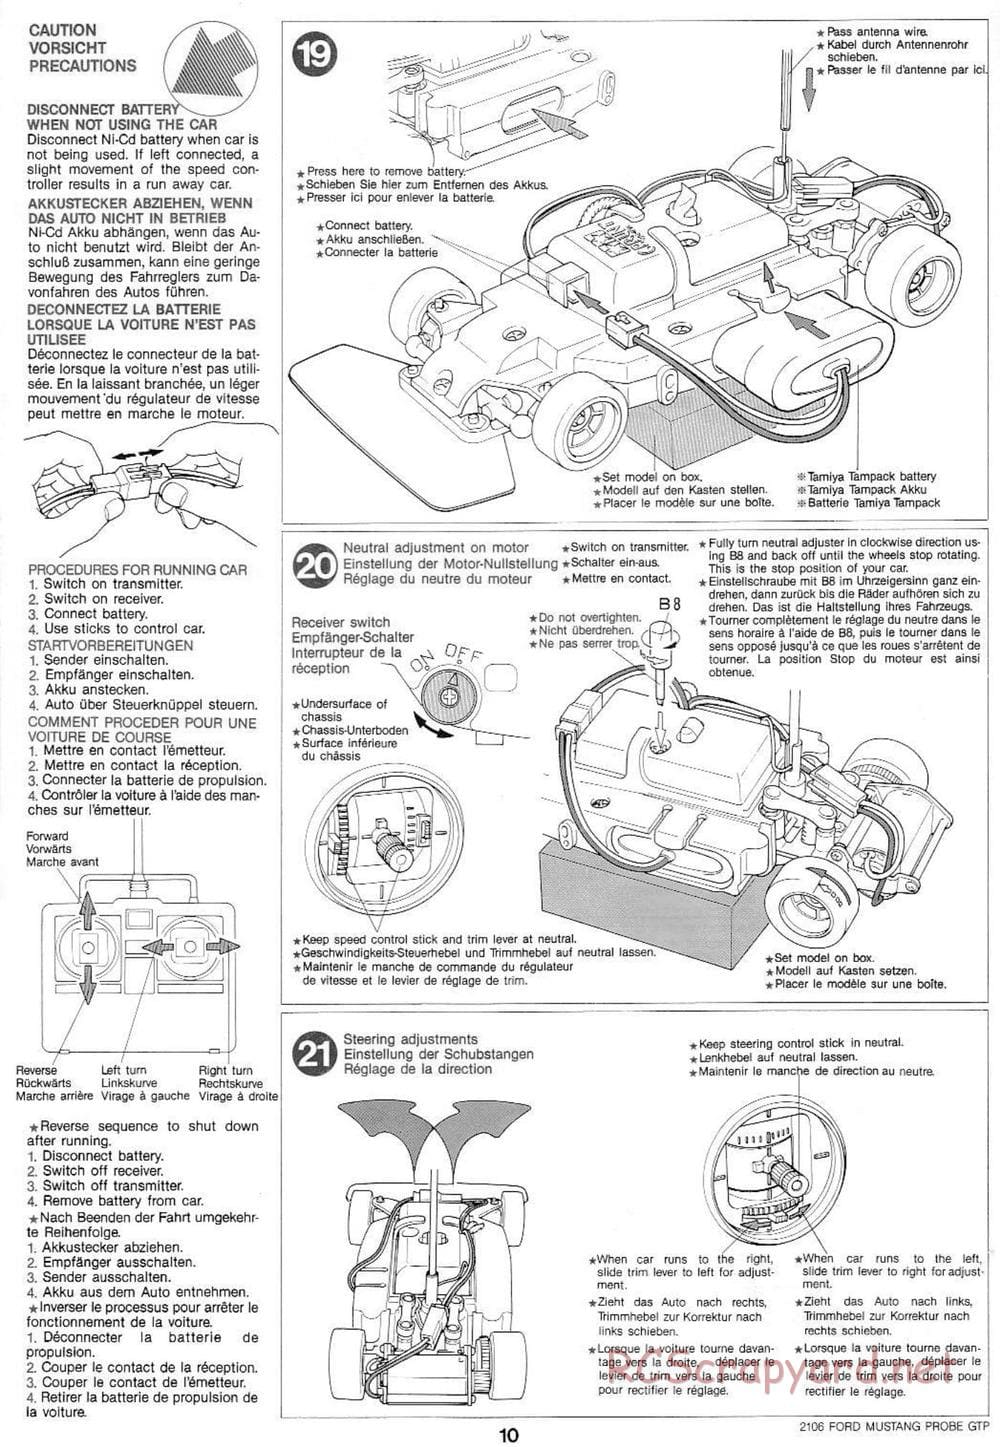 Tamiya - Tamtech - Ford Mustang Probe GTP Chassis - Manual - Page 10